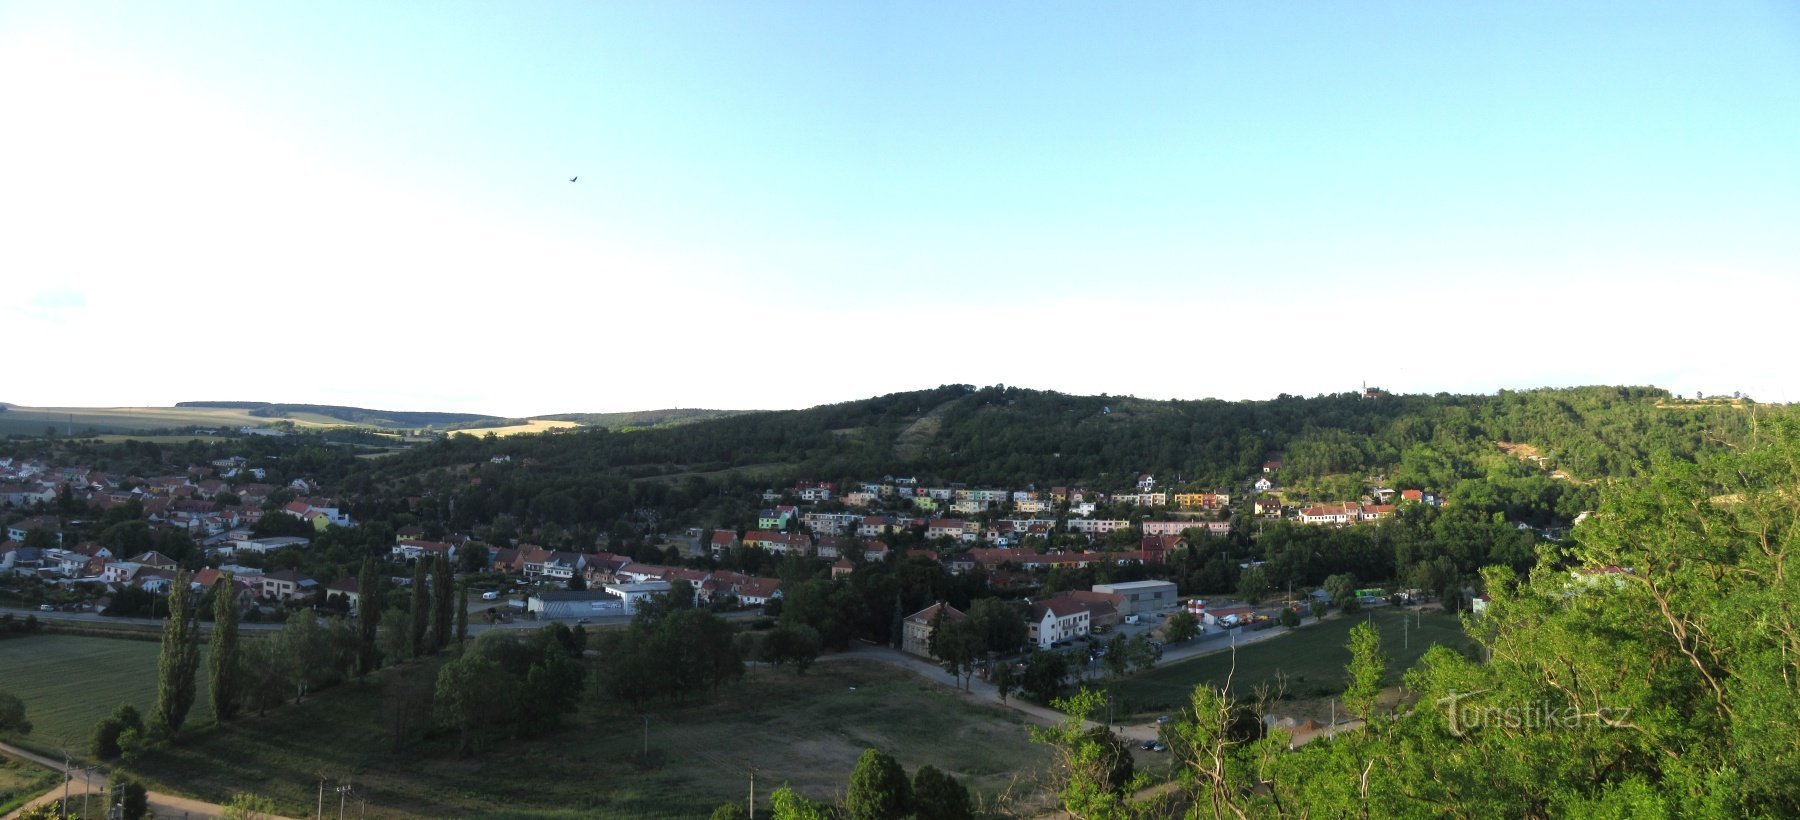 Ivančice - στο Ρήνο - φρούριο, πάρκο και παρατηρητήριο του Alfons Mucha (Réna)